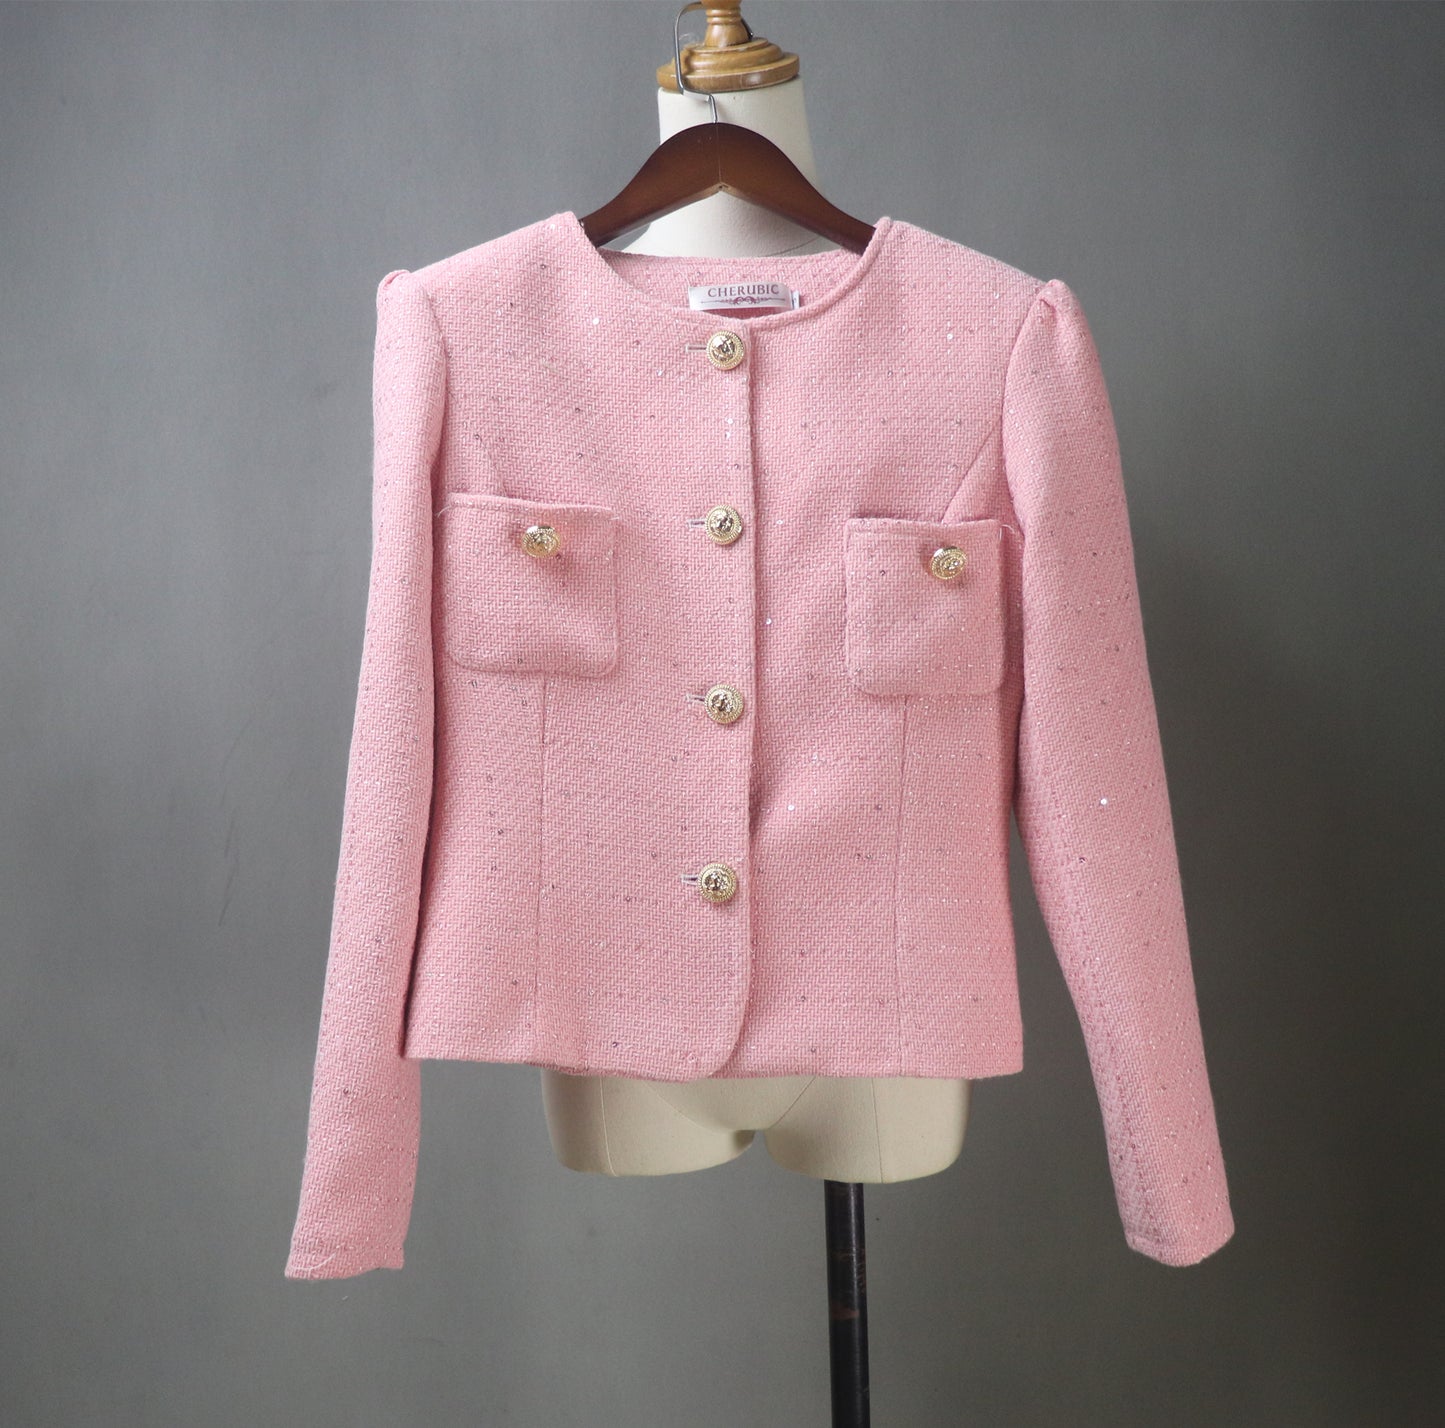 Pink Tweed Midi Skirt Suit with Sequins